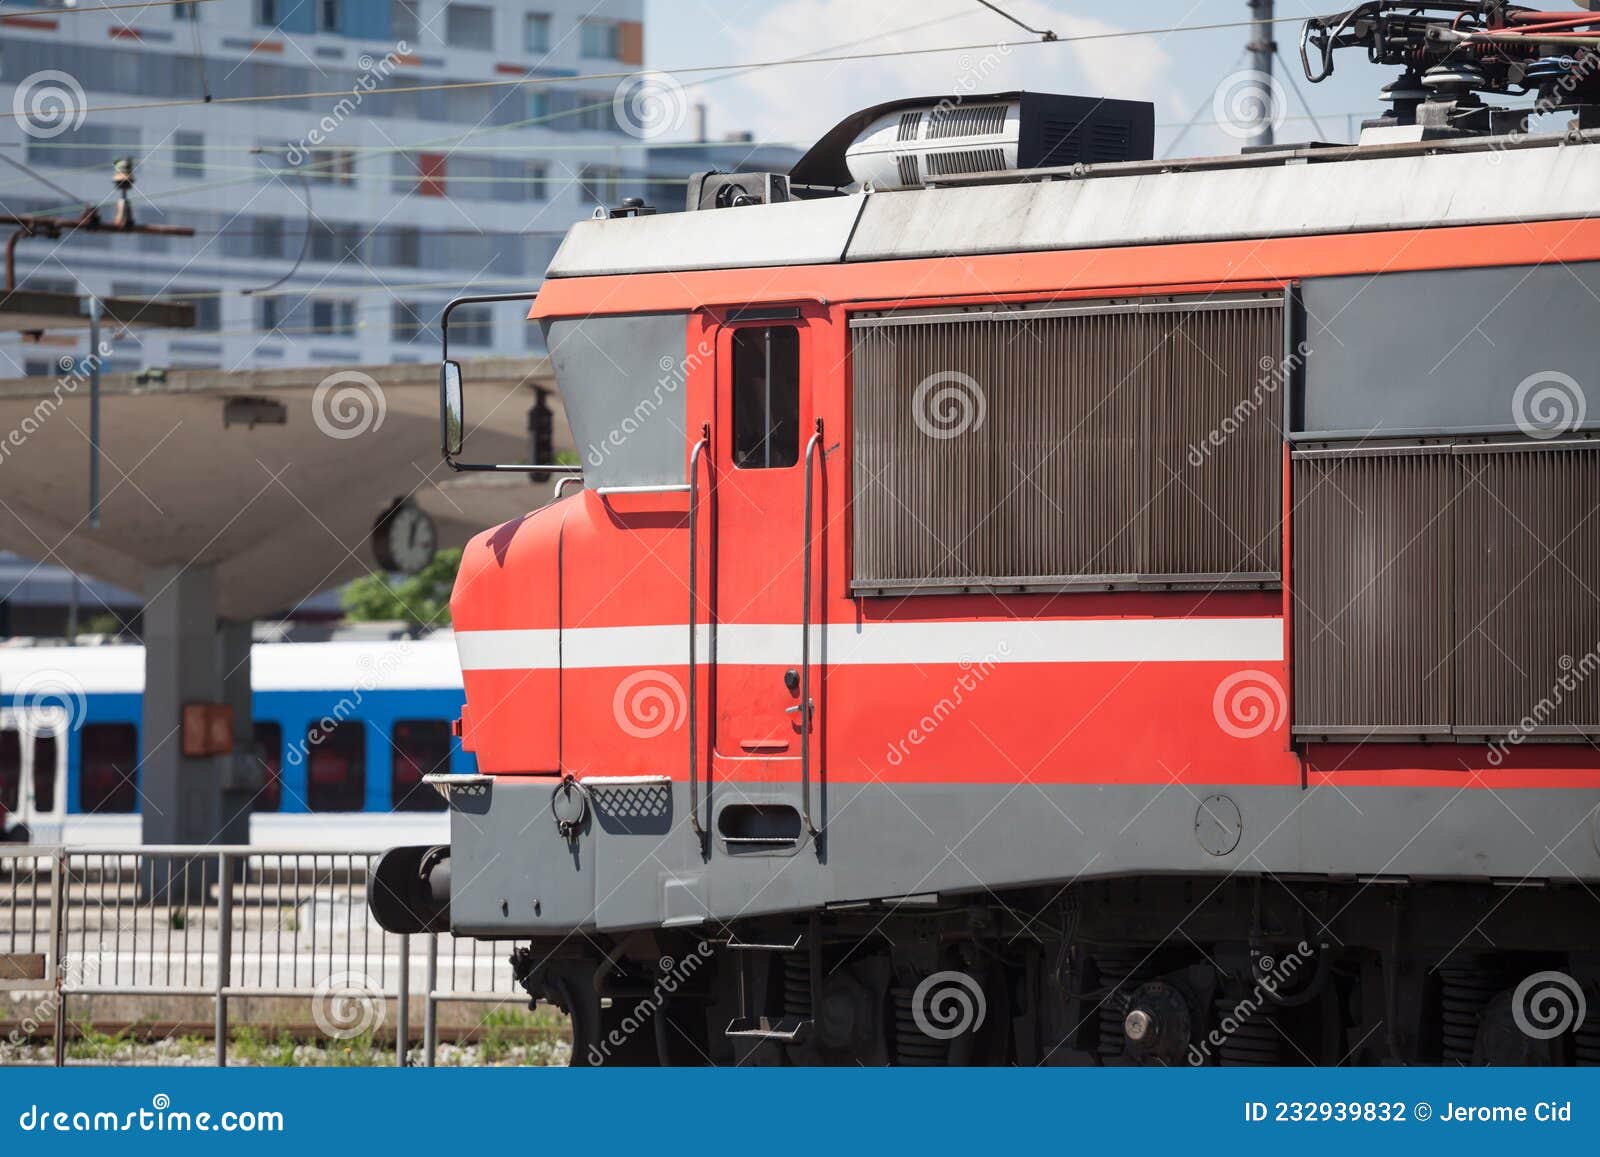 red electric locomotive of slovenian railways shunting on ljubljana train station platform getting ready for departure.